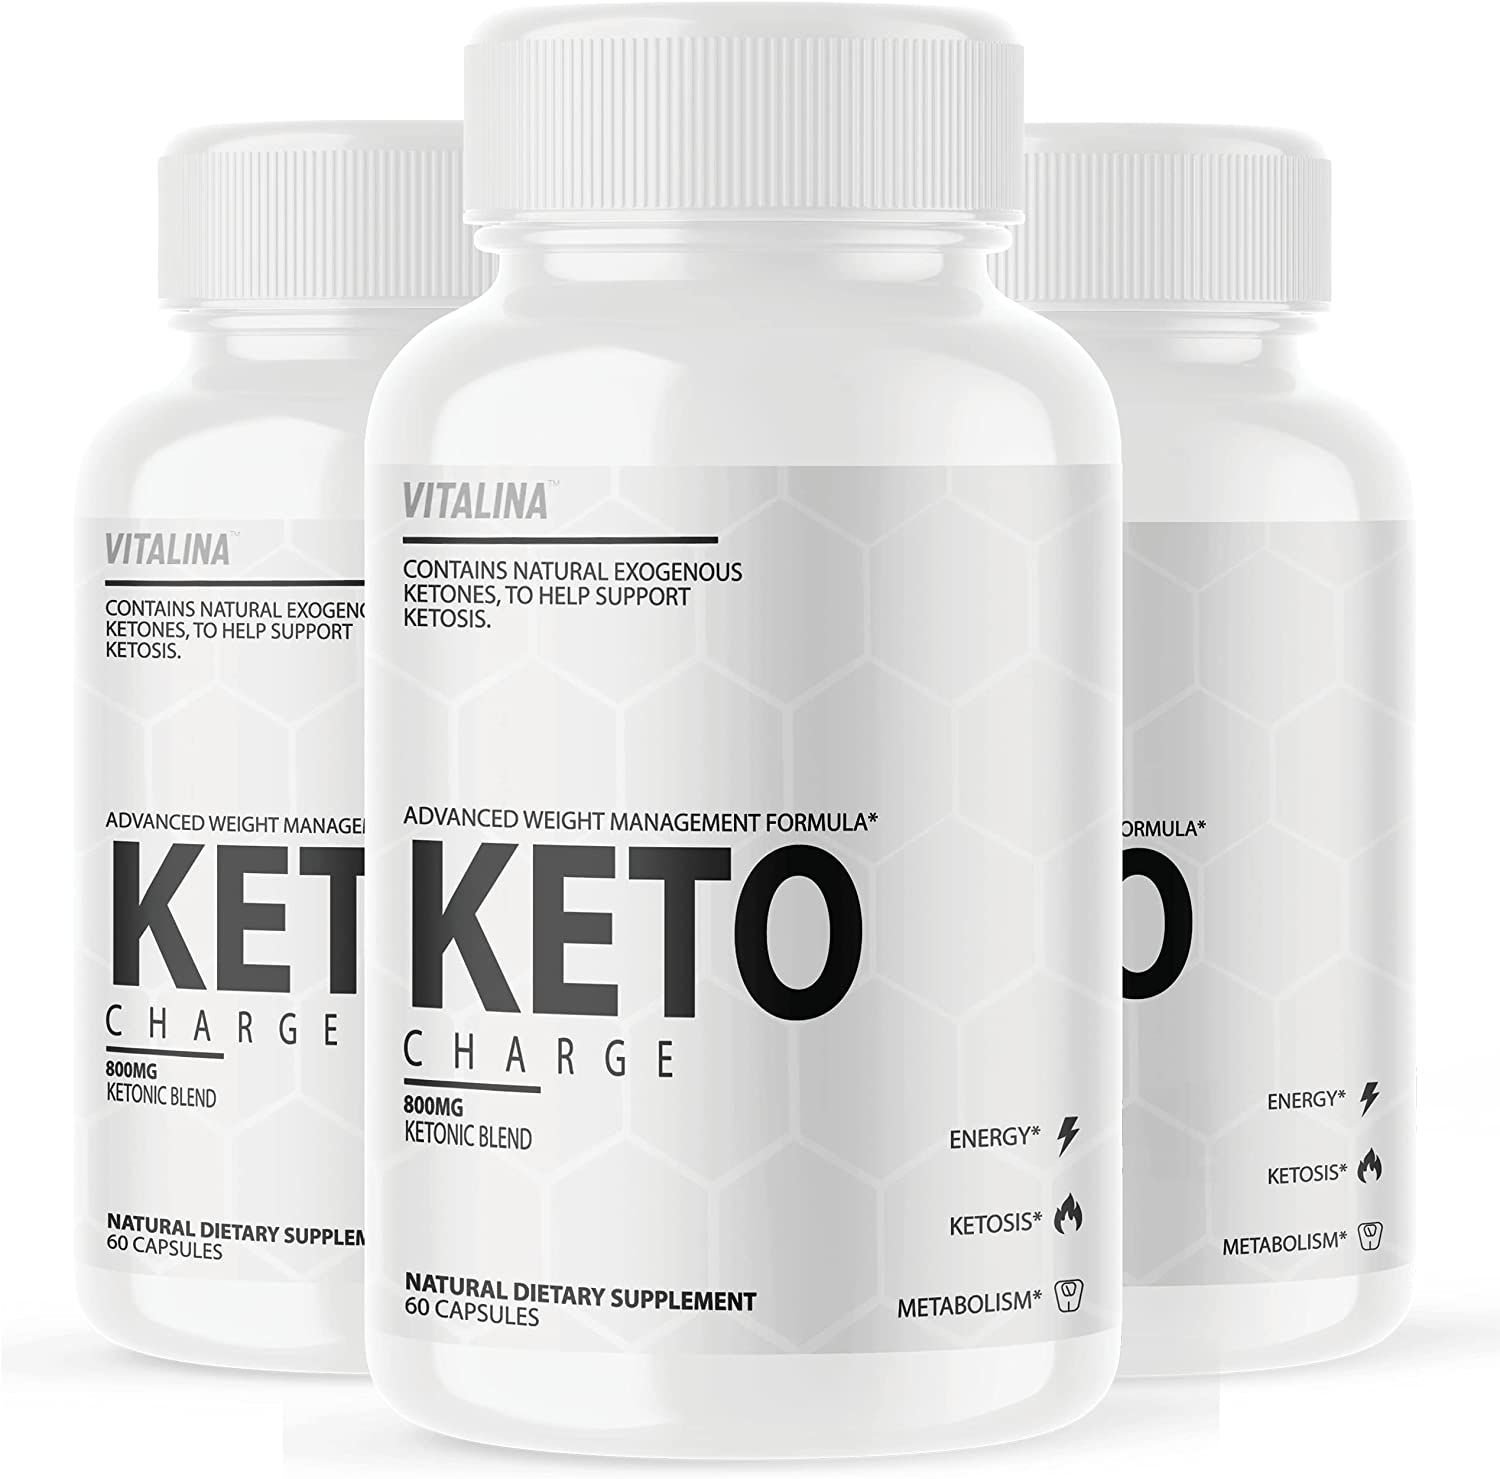 Do KetoCharge Pills Work? Shocking 21 Days Results